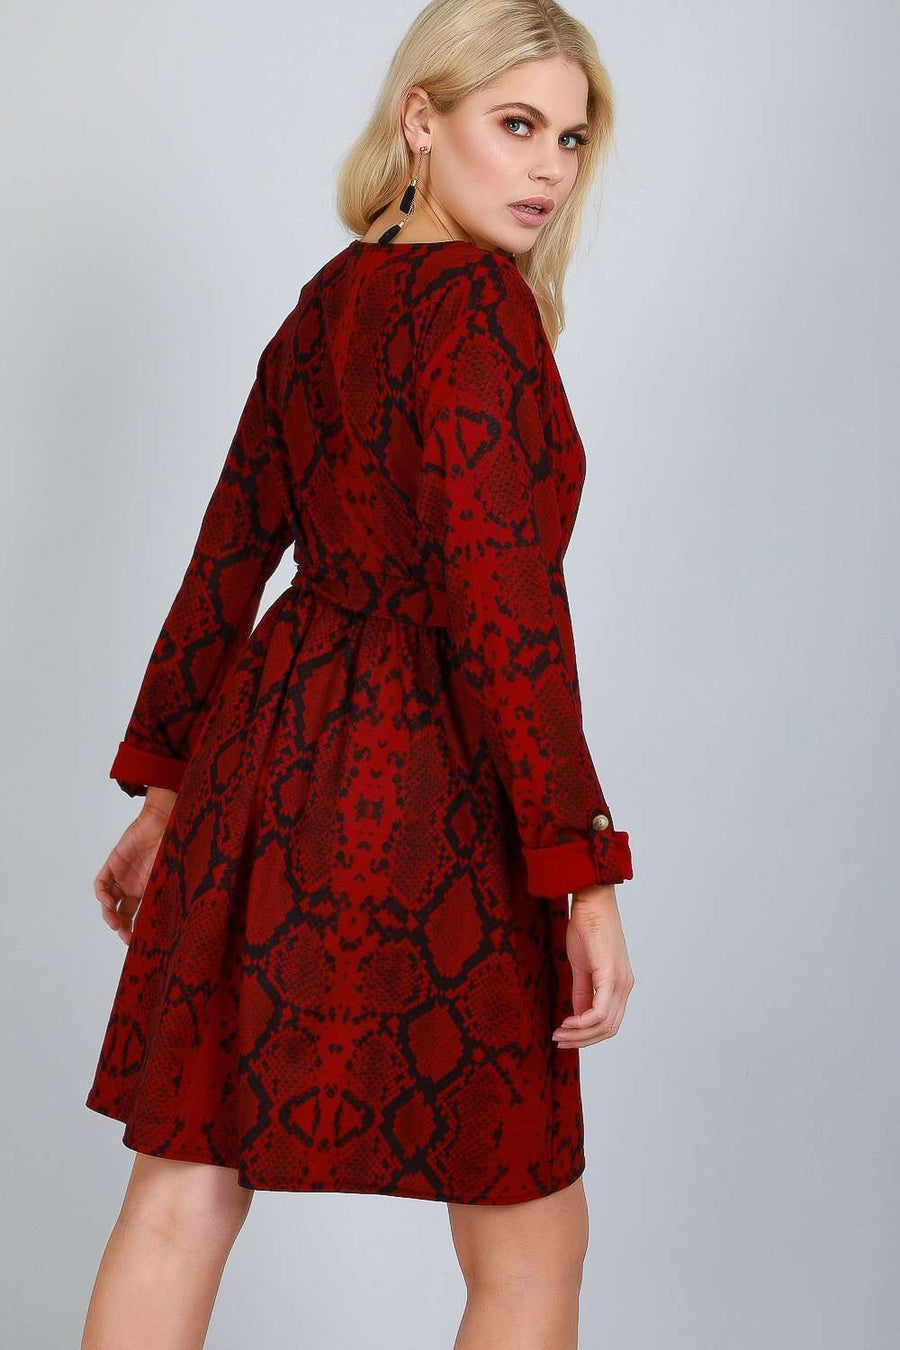 Jess Long Sleeve Snake Print Shift Dress - bejealous-com